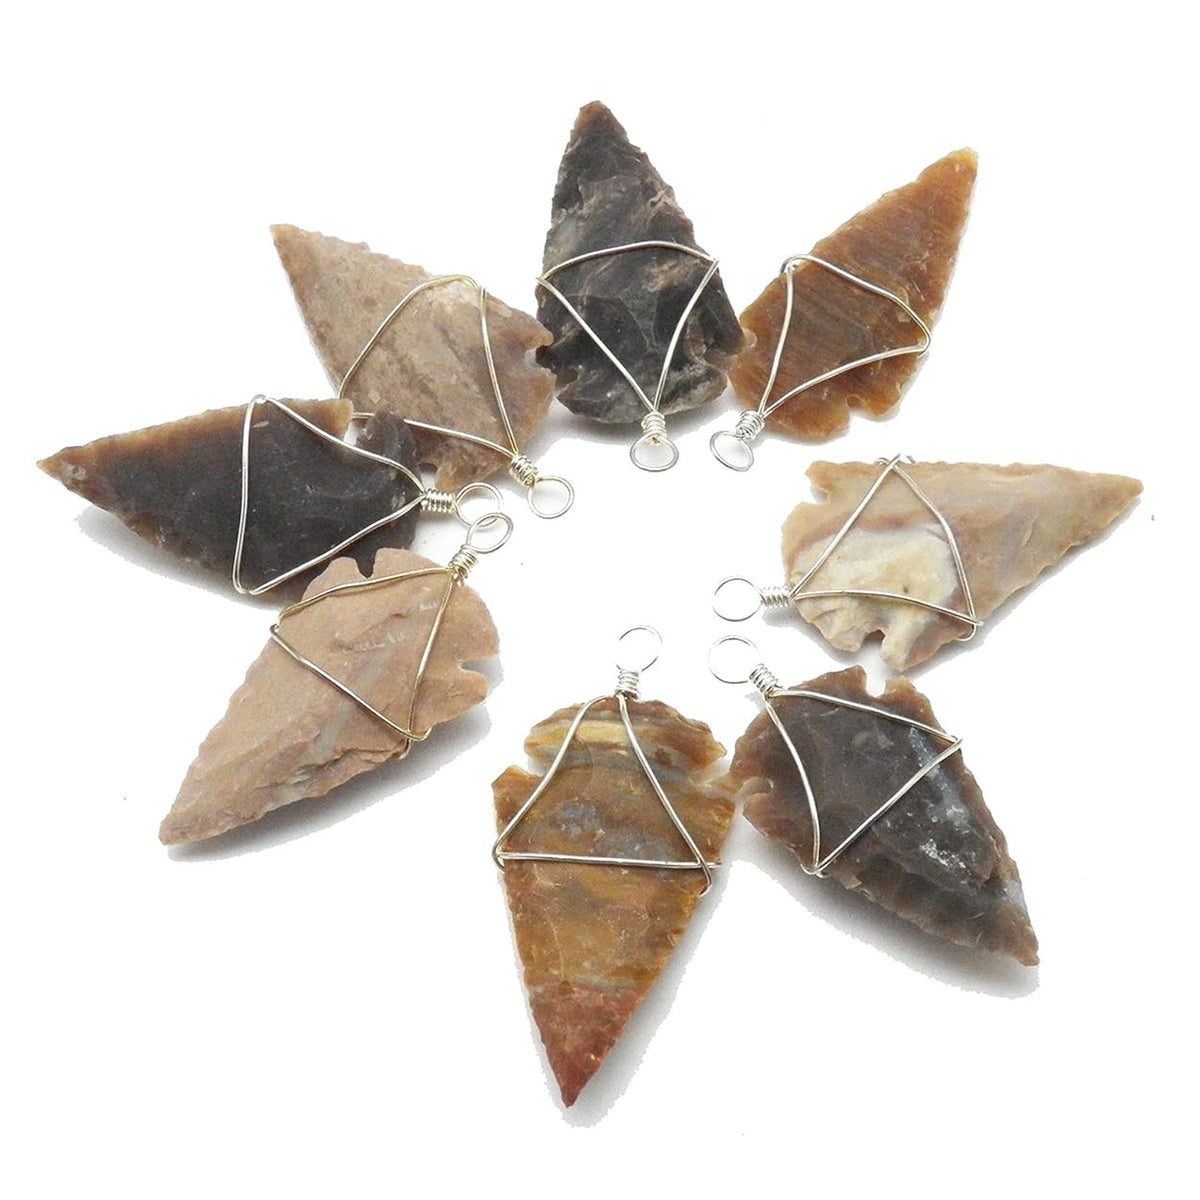 Wholesale Stone Arrowhead Pendants Jewelry - Small 1.5 Inch (Sold By Dozen)